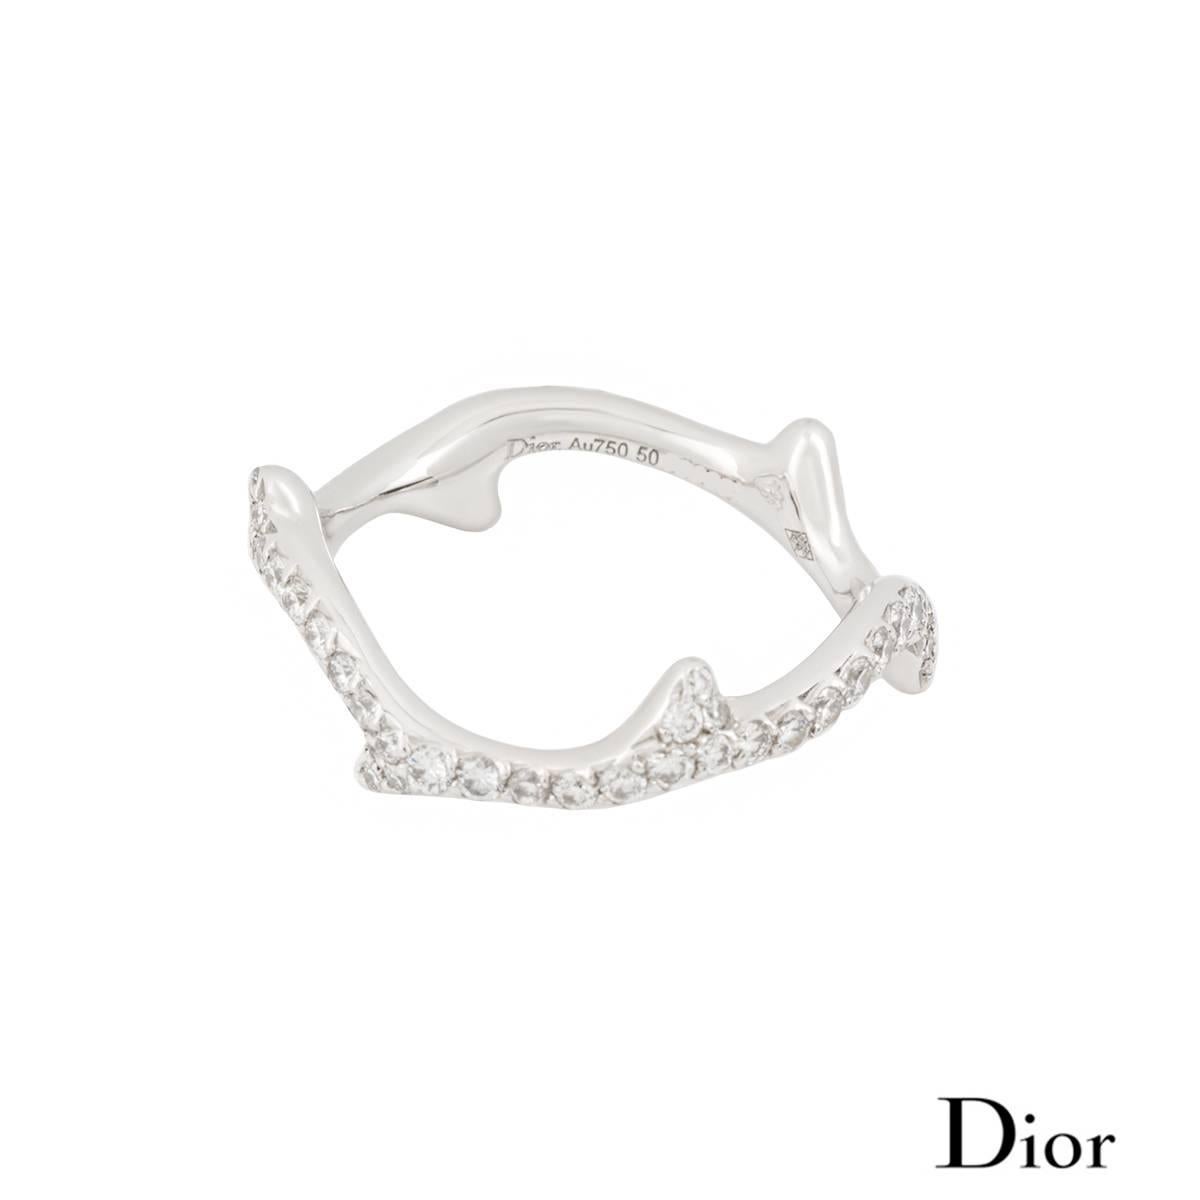 Dior - Bois de Rose Bracelet Pink Gold - Size 14.5 cm / 5.7 Inches - Women Jewelry